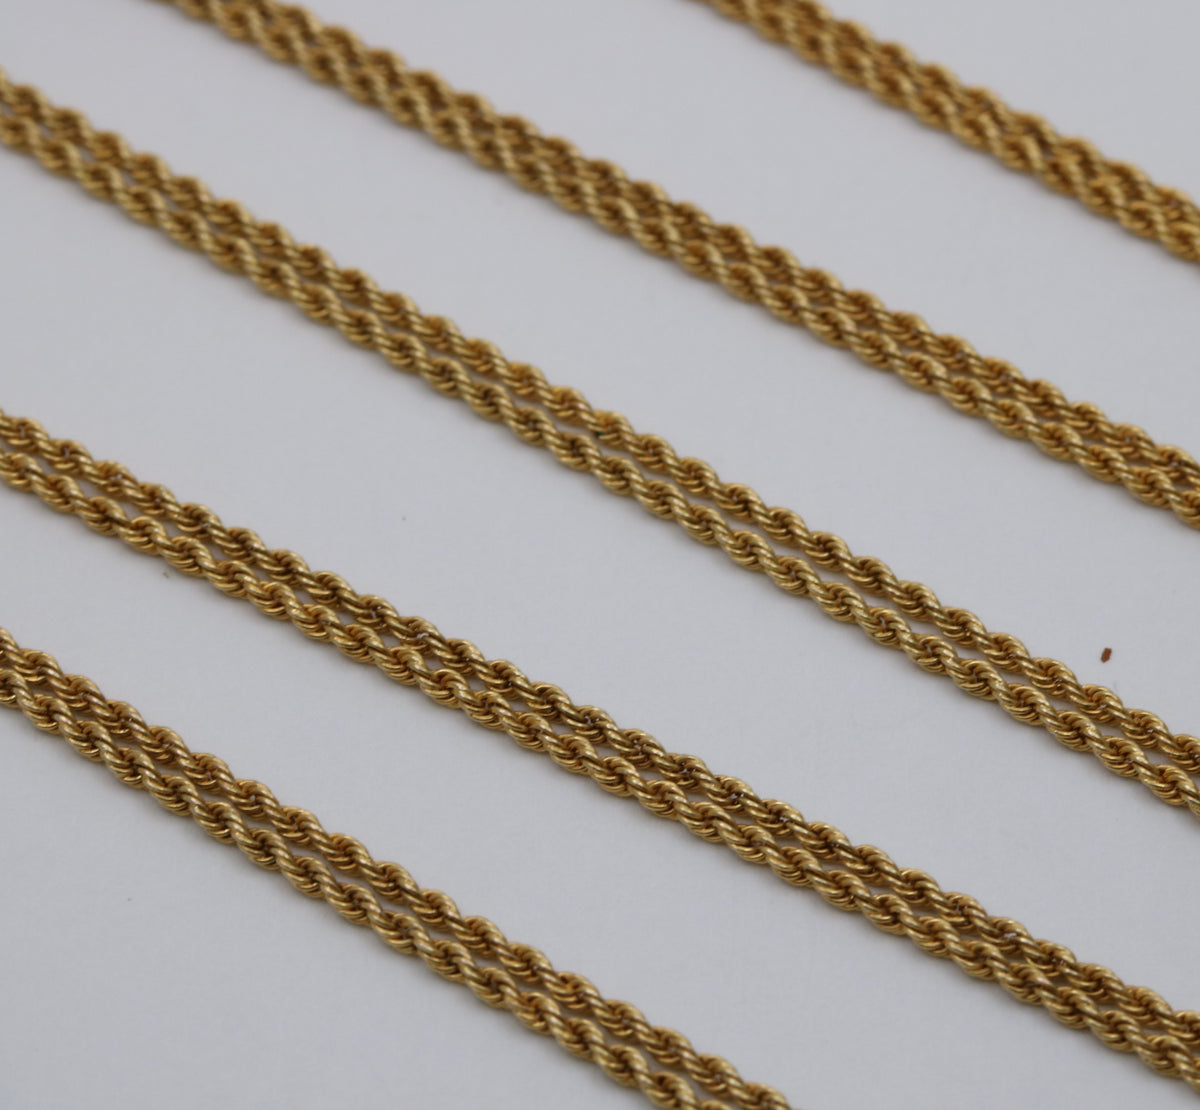 Victorian 10K Rope Longuard Chain, 48” Long